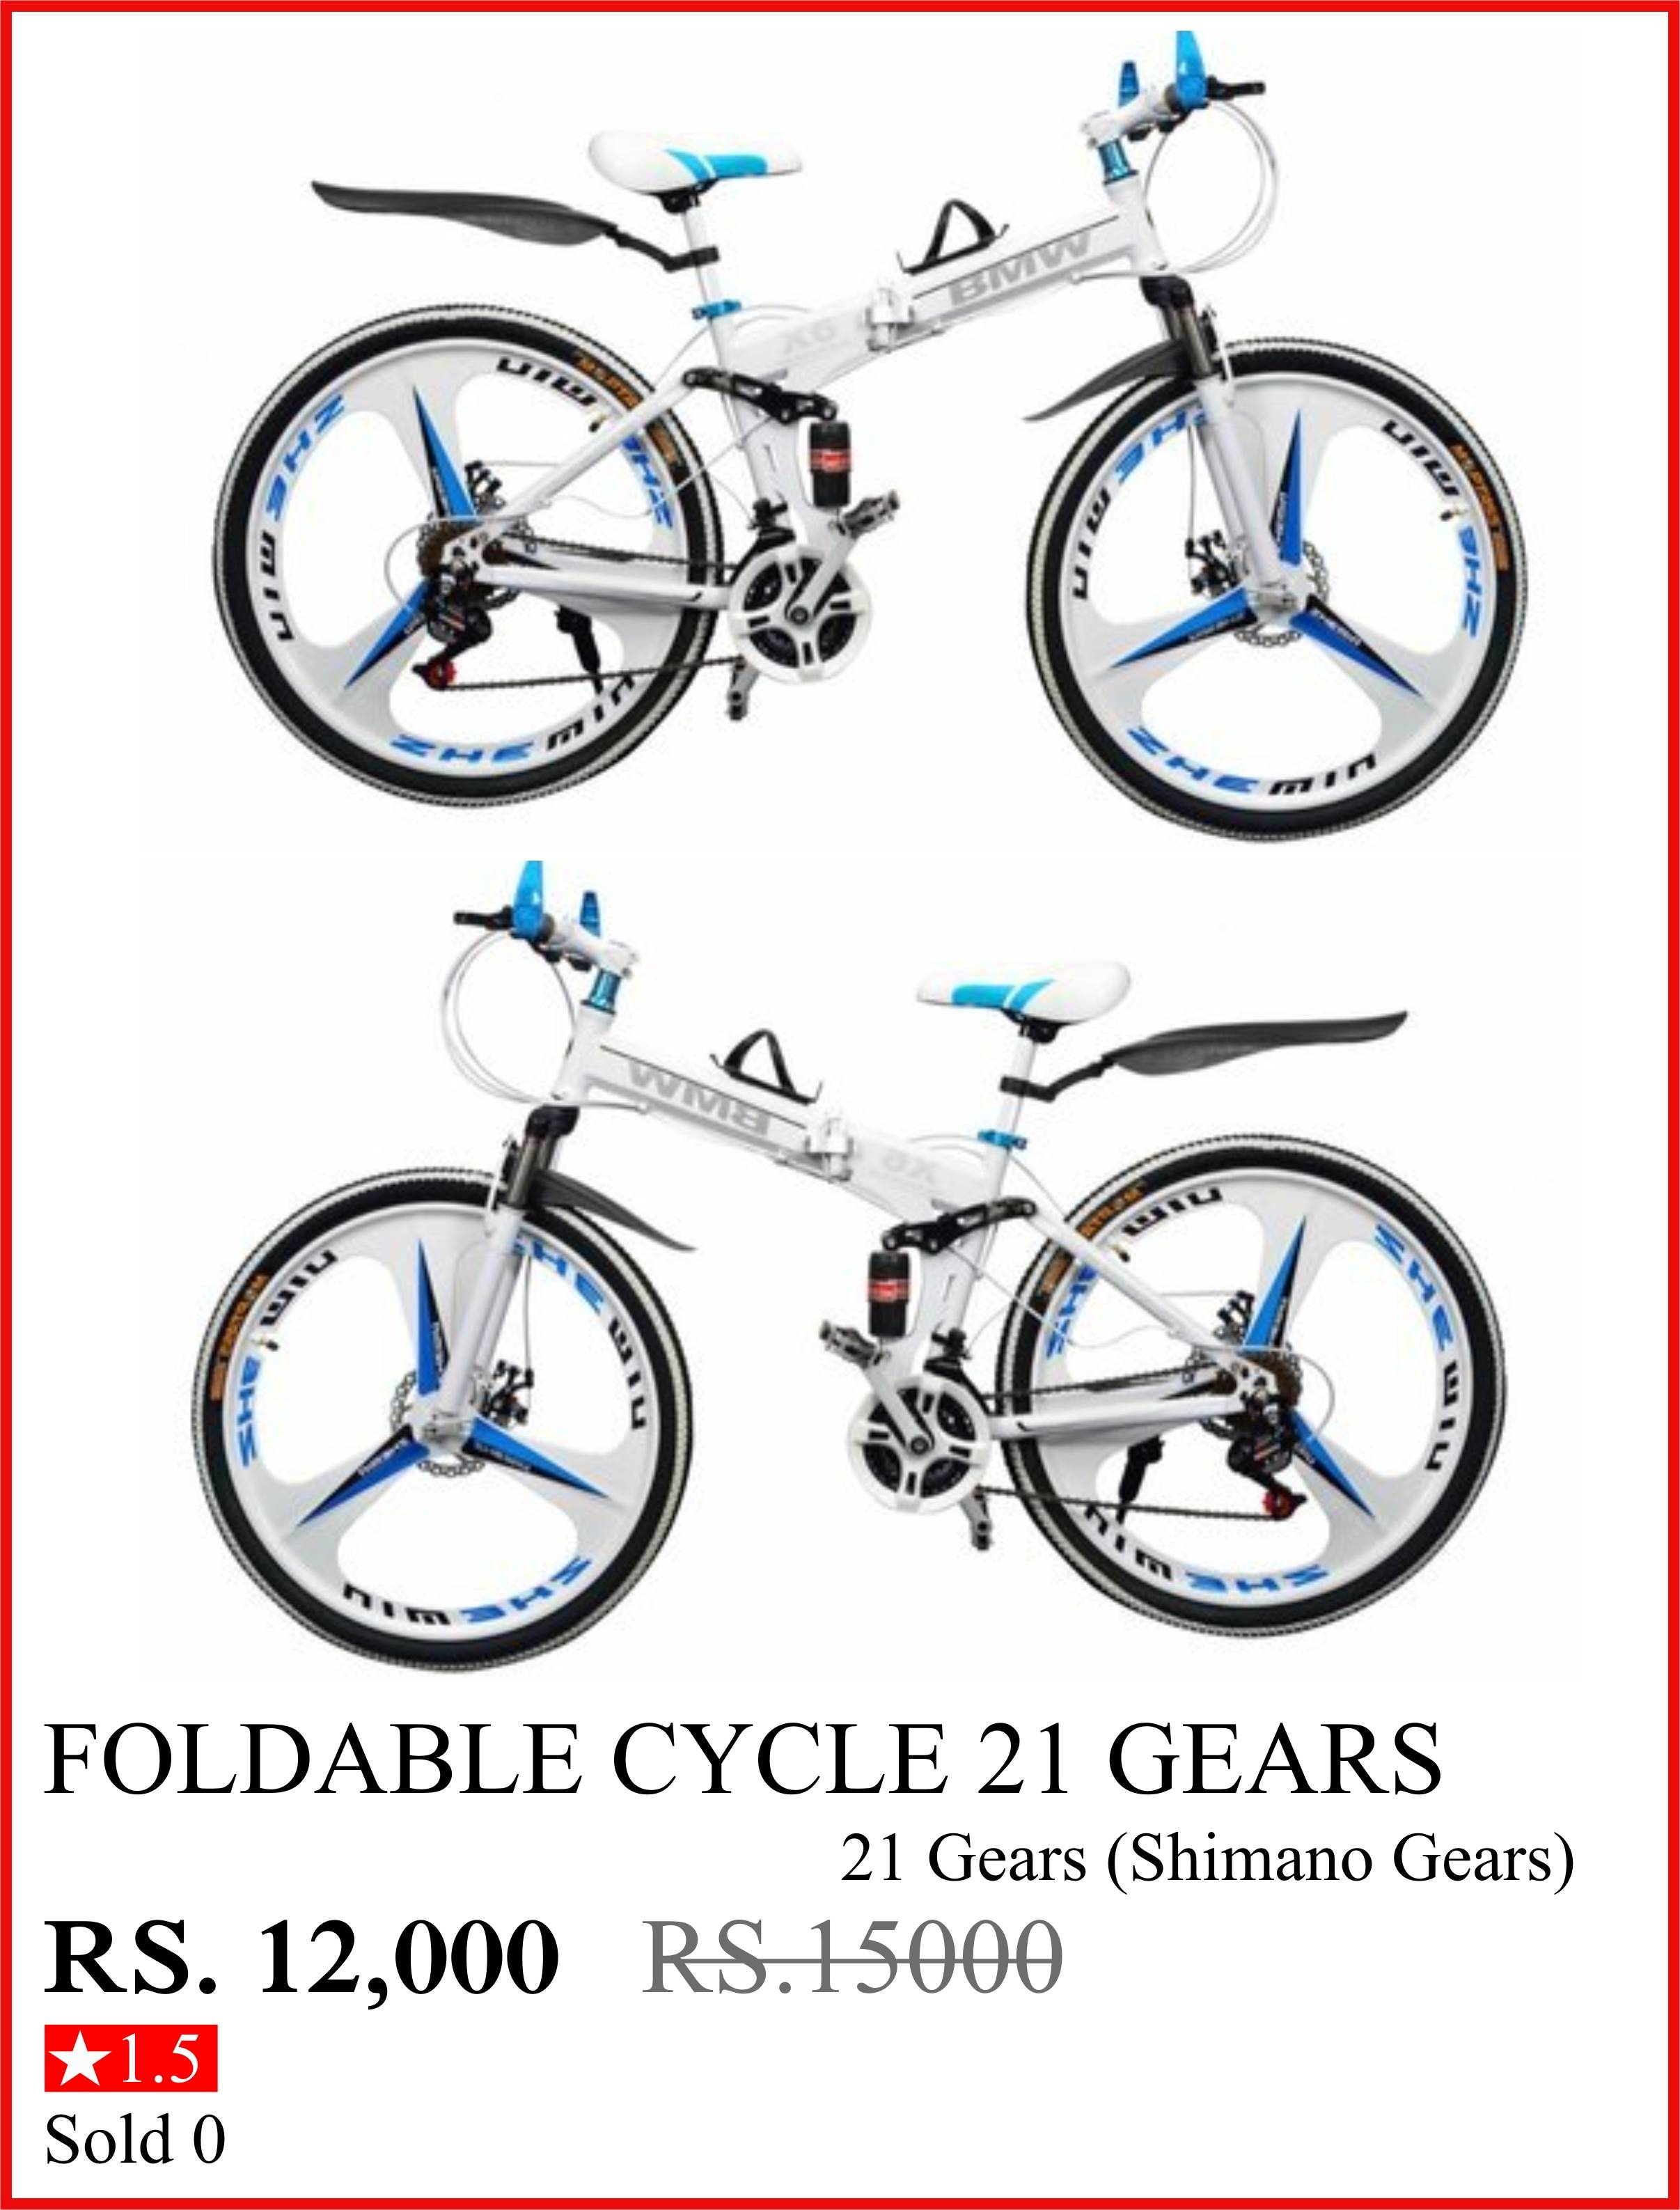 21 gear folding cycle